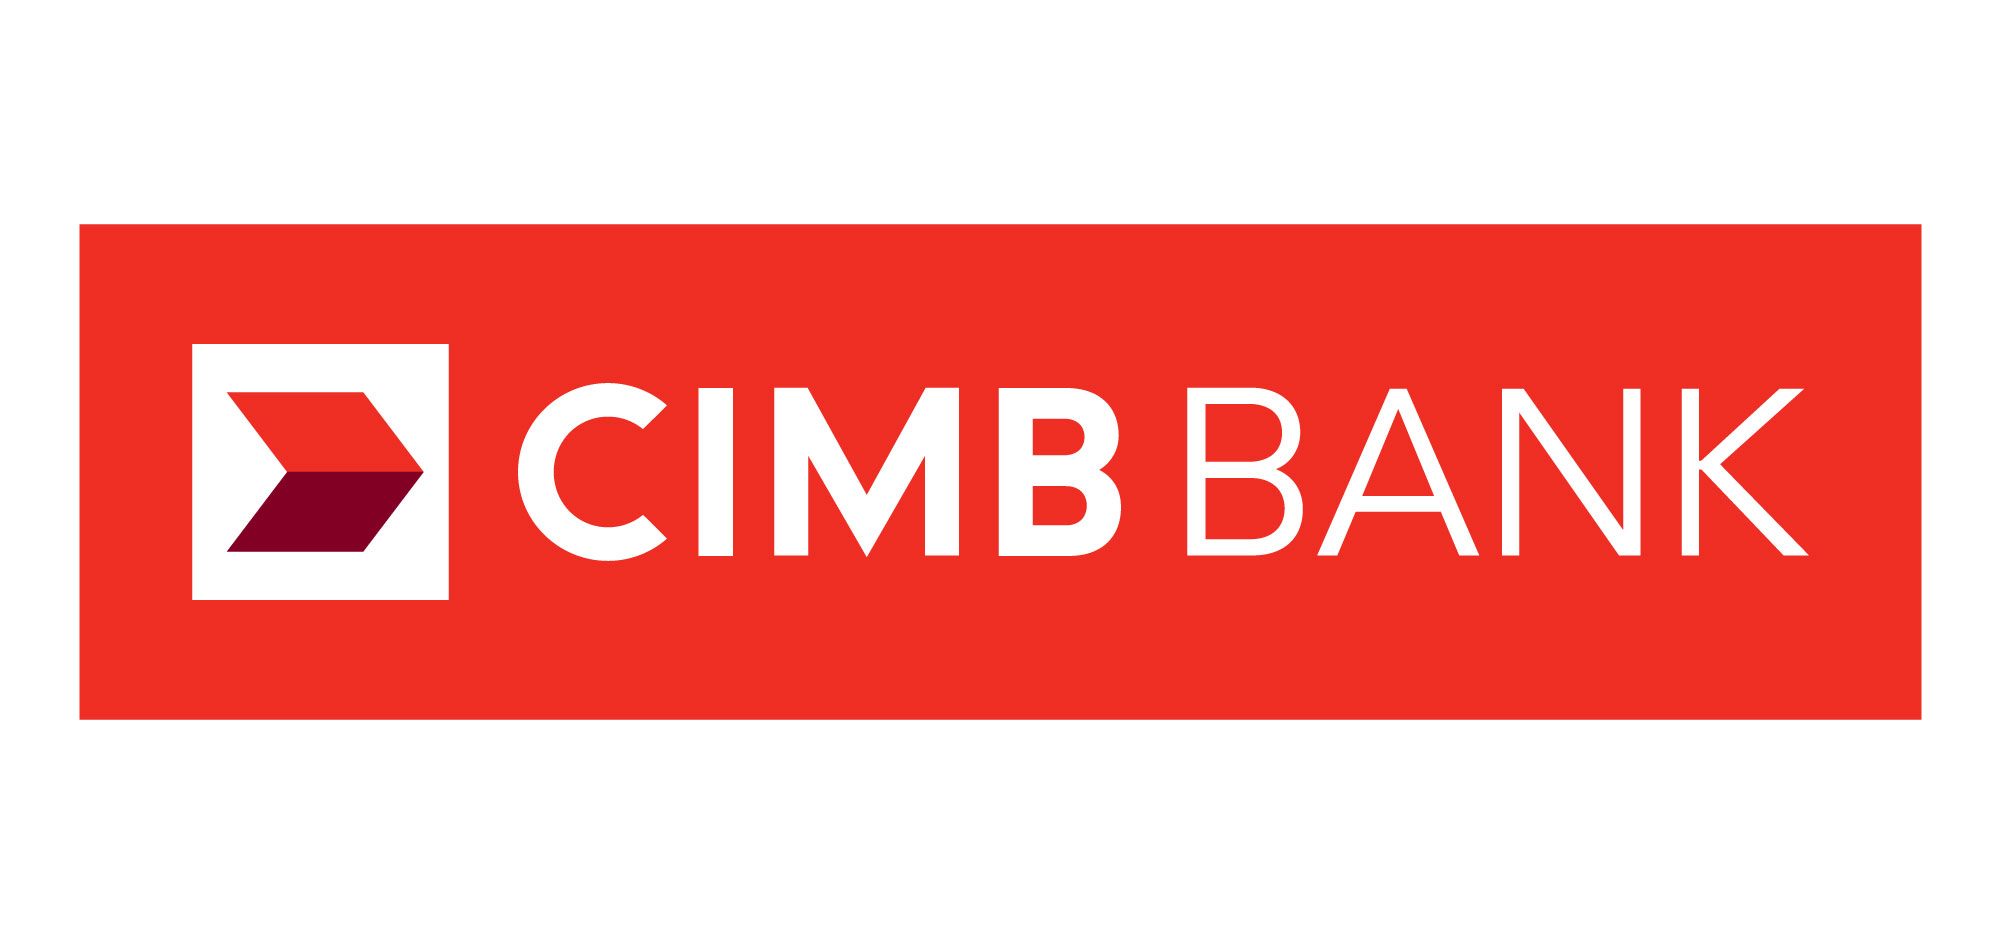 cimb-bank-logo-vector.jpg